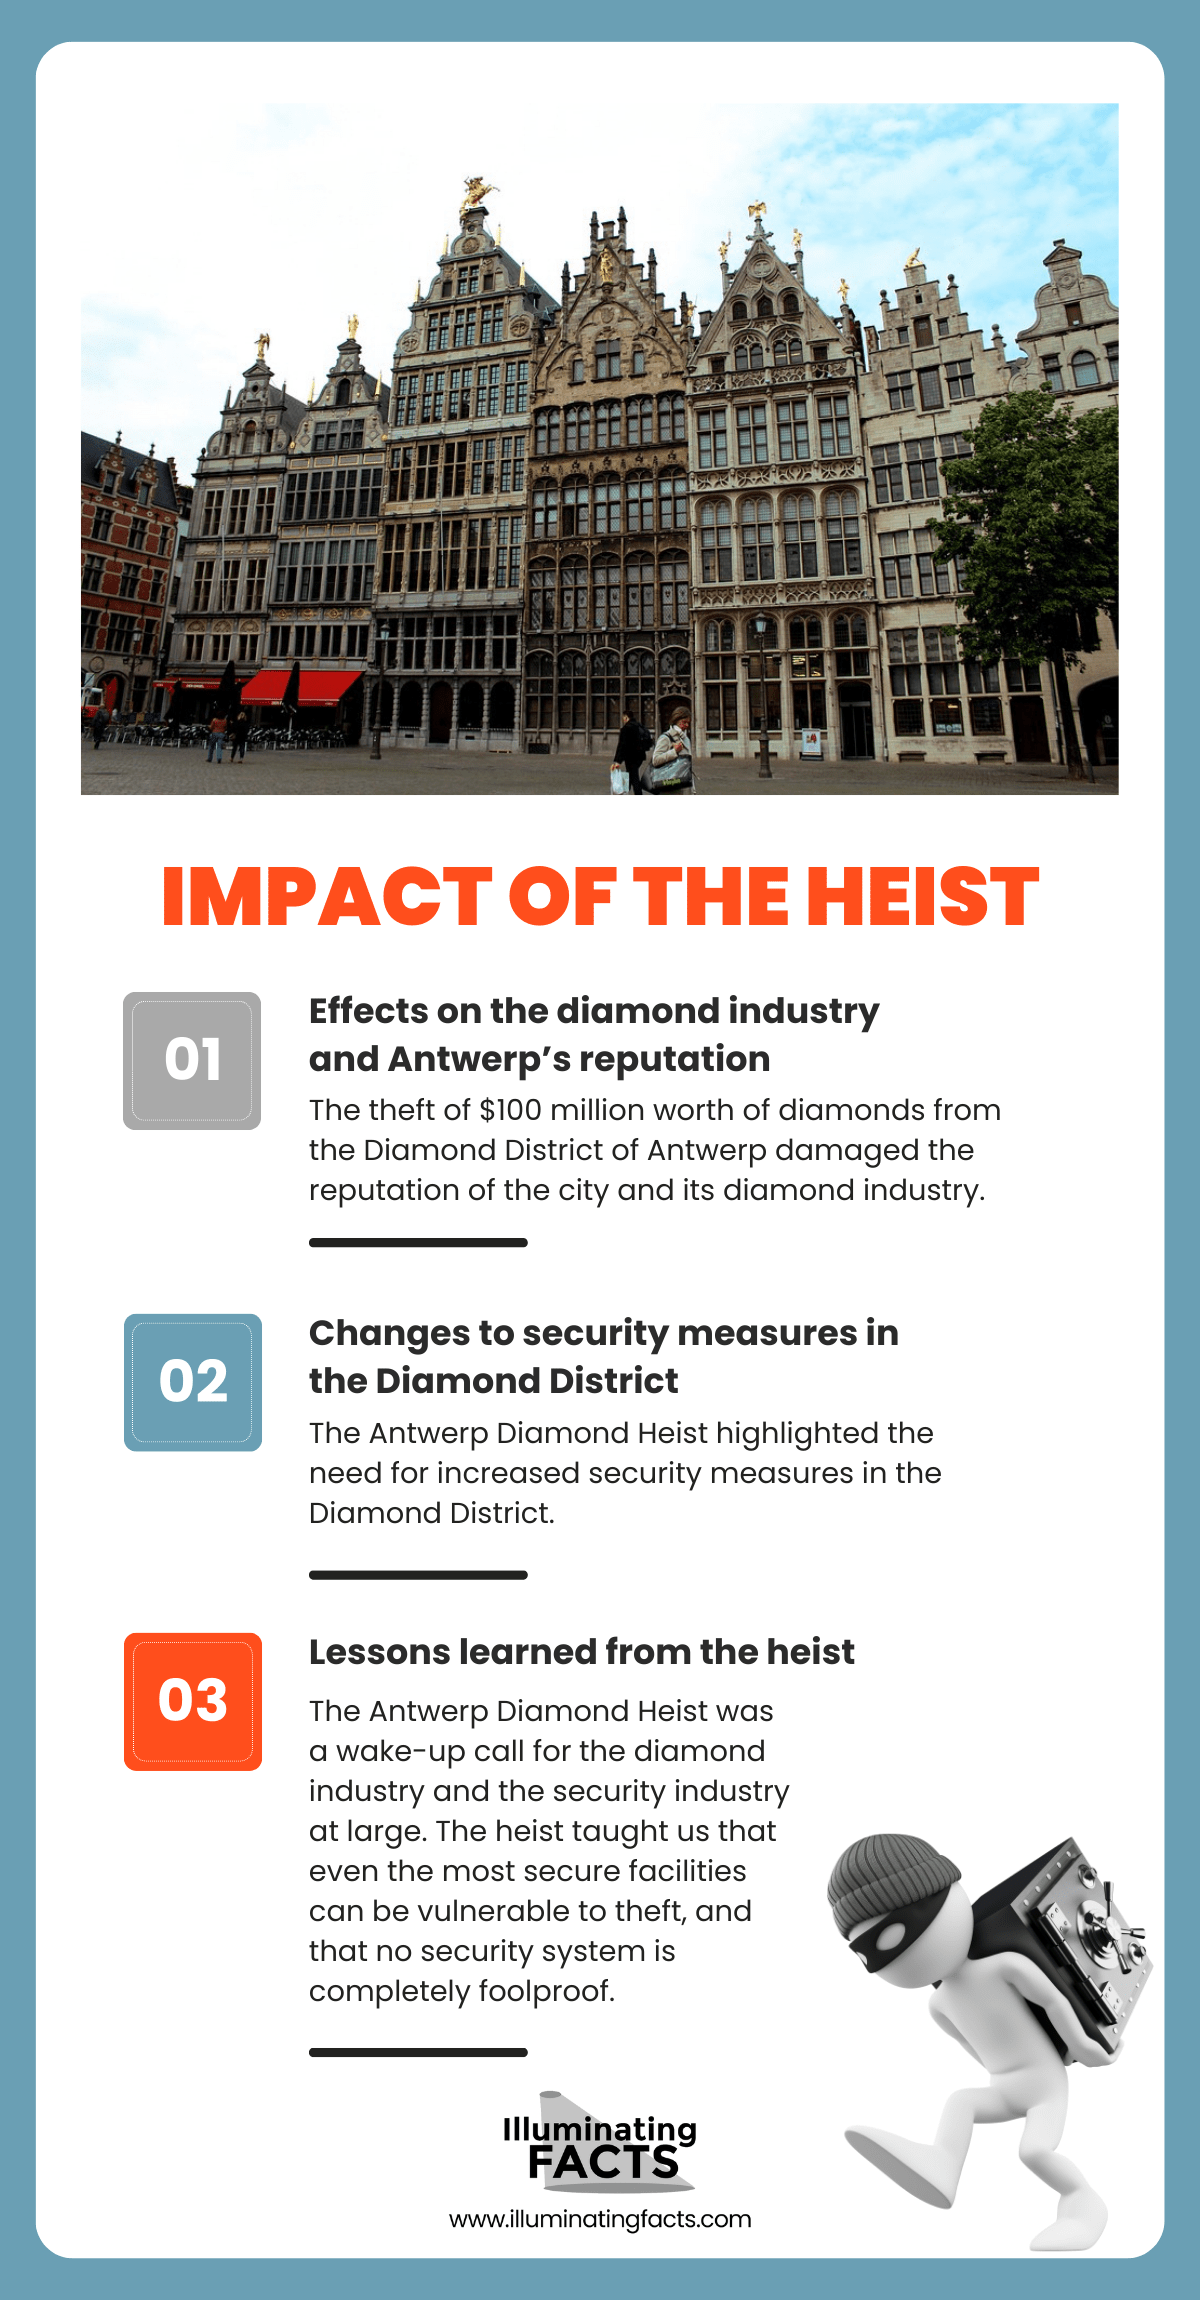 Impact of the heist